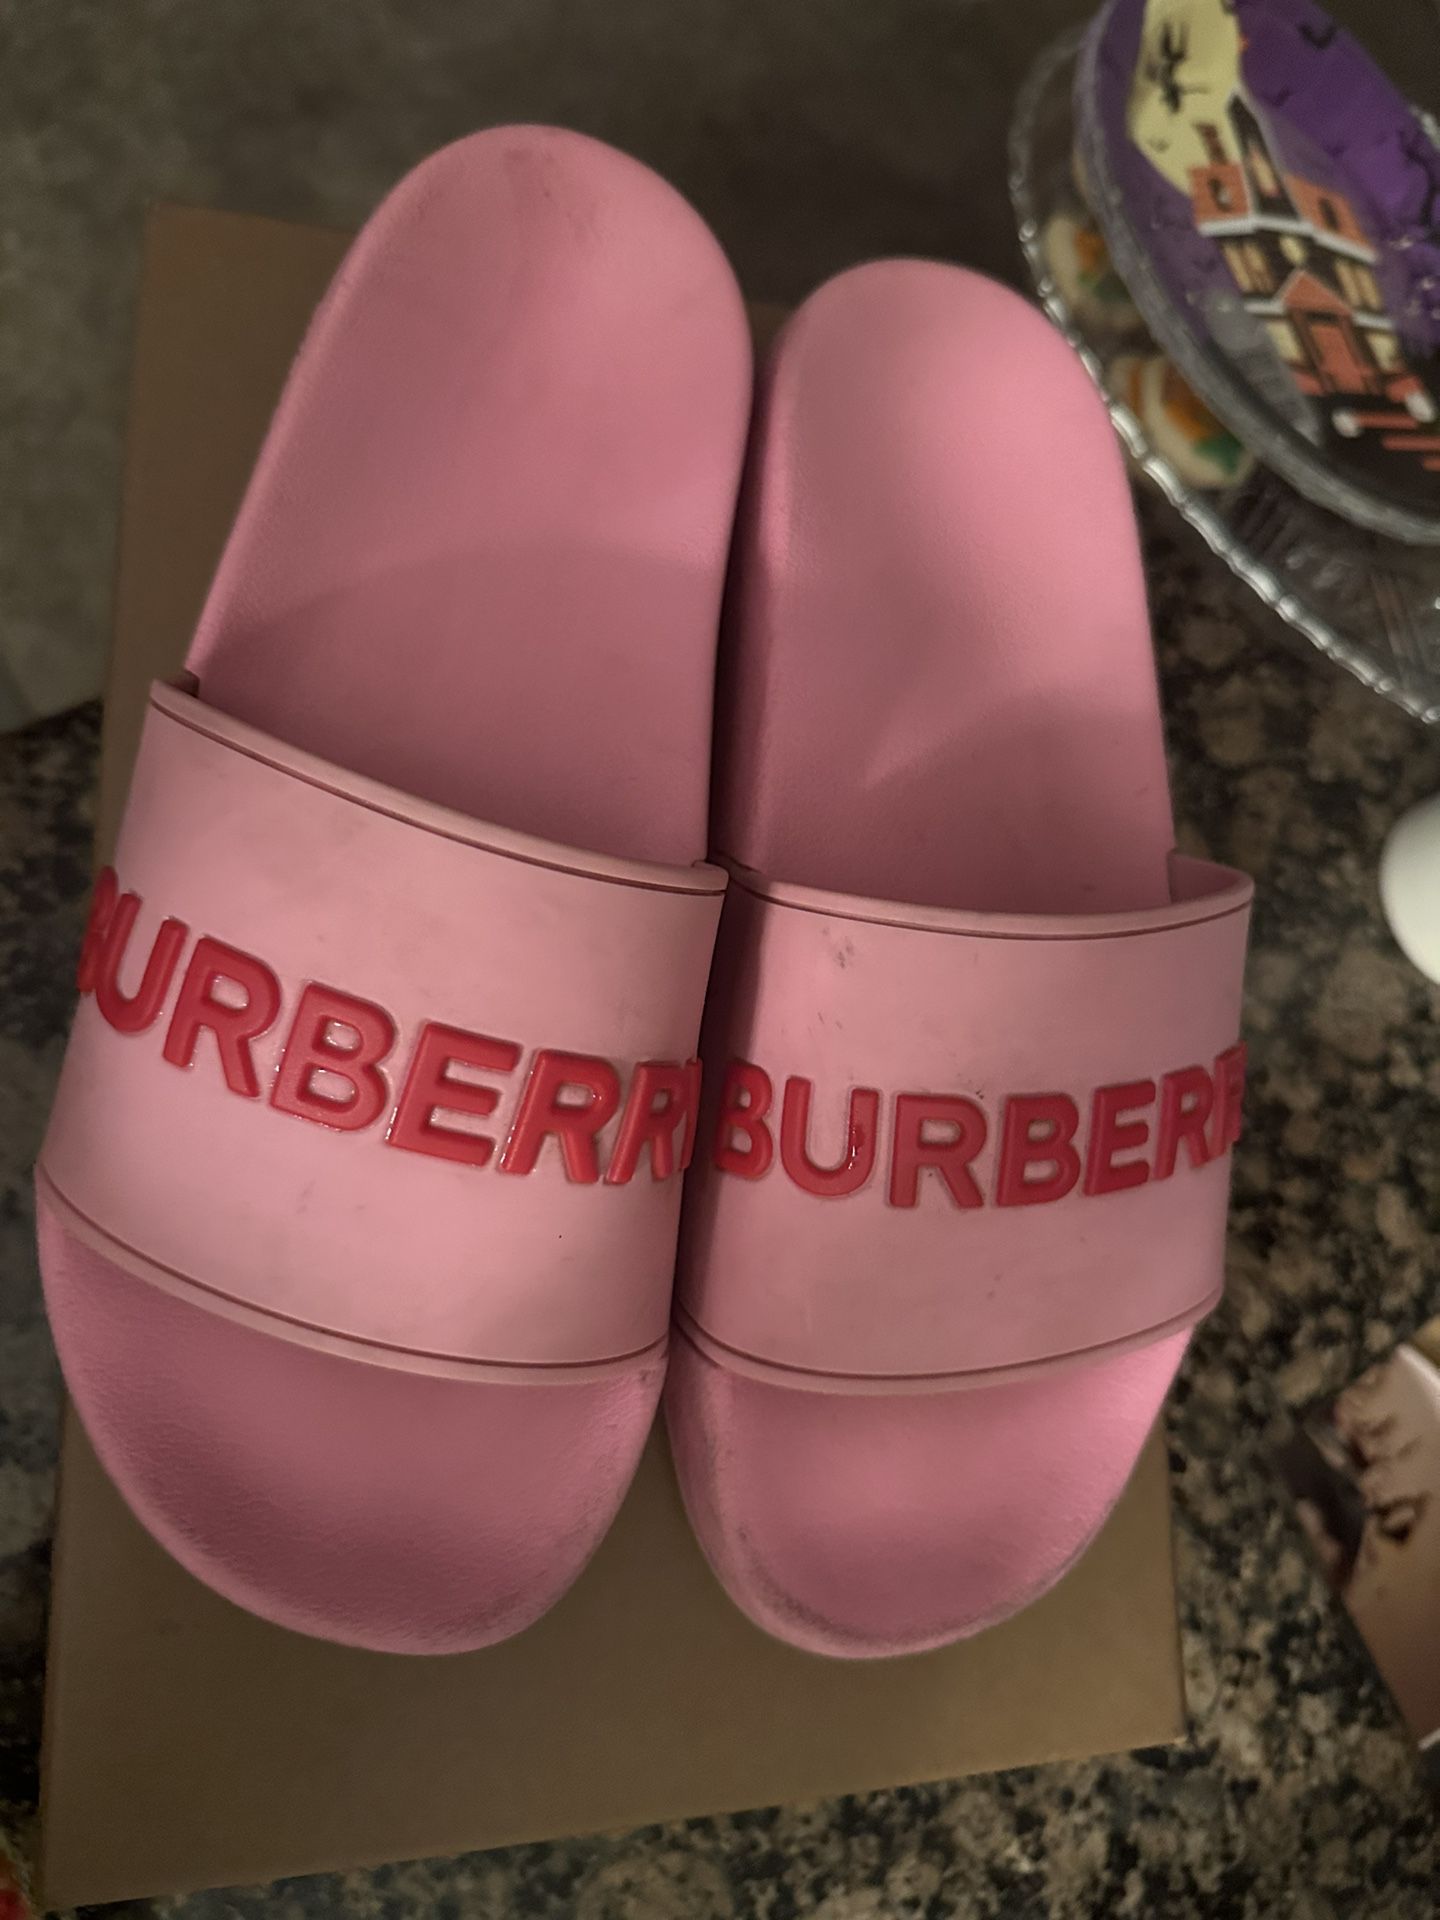 Burberry Pink slides